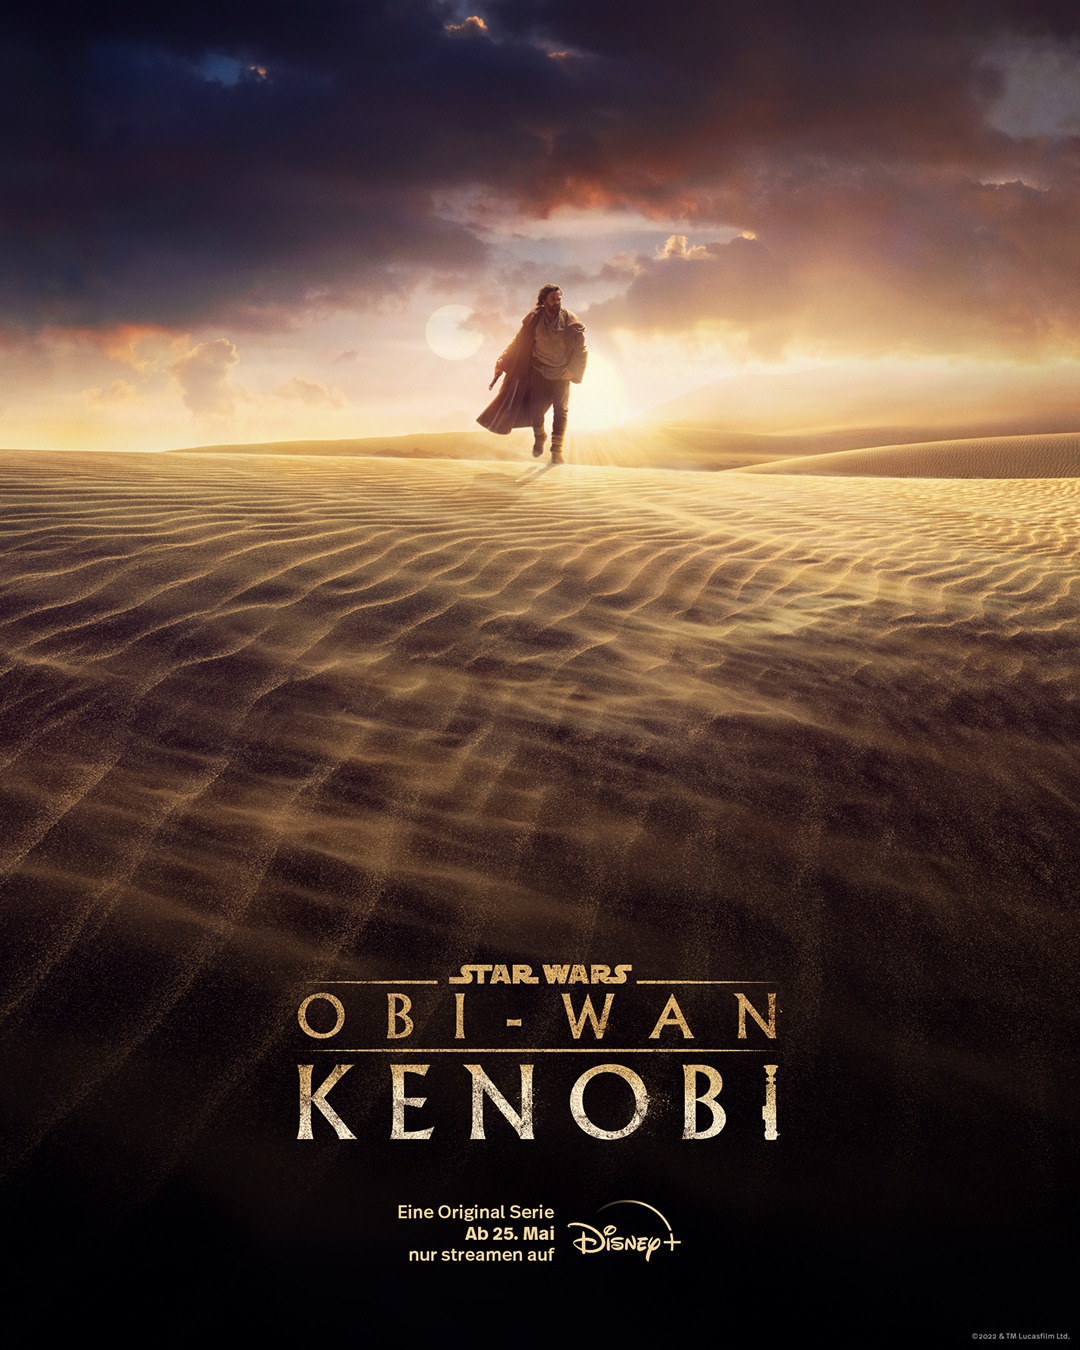 Star Wars - Obi-Wan Kenobi - Ewan McGregor